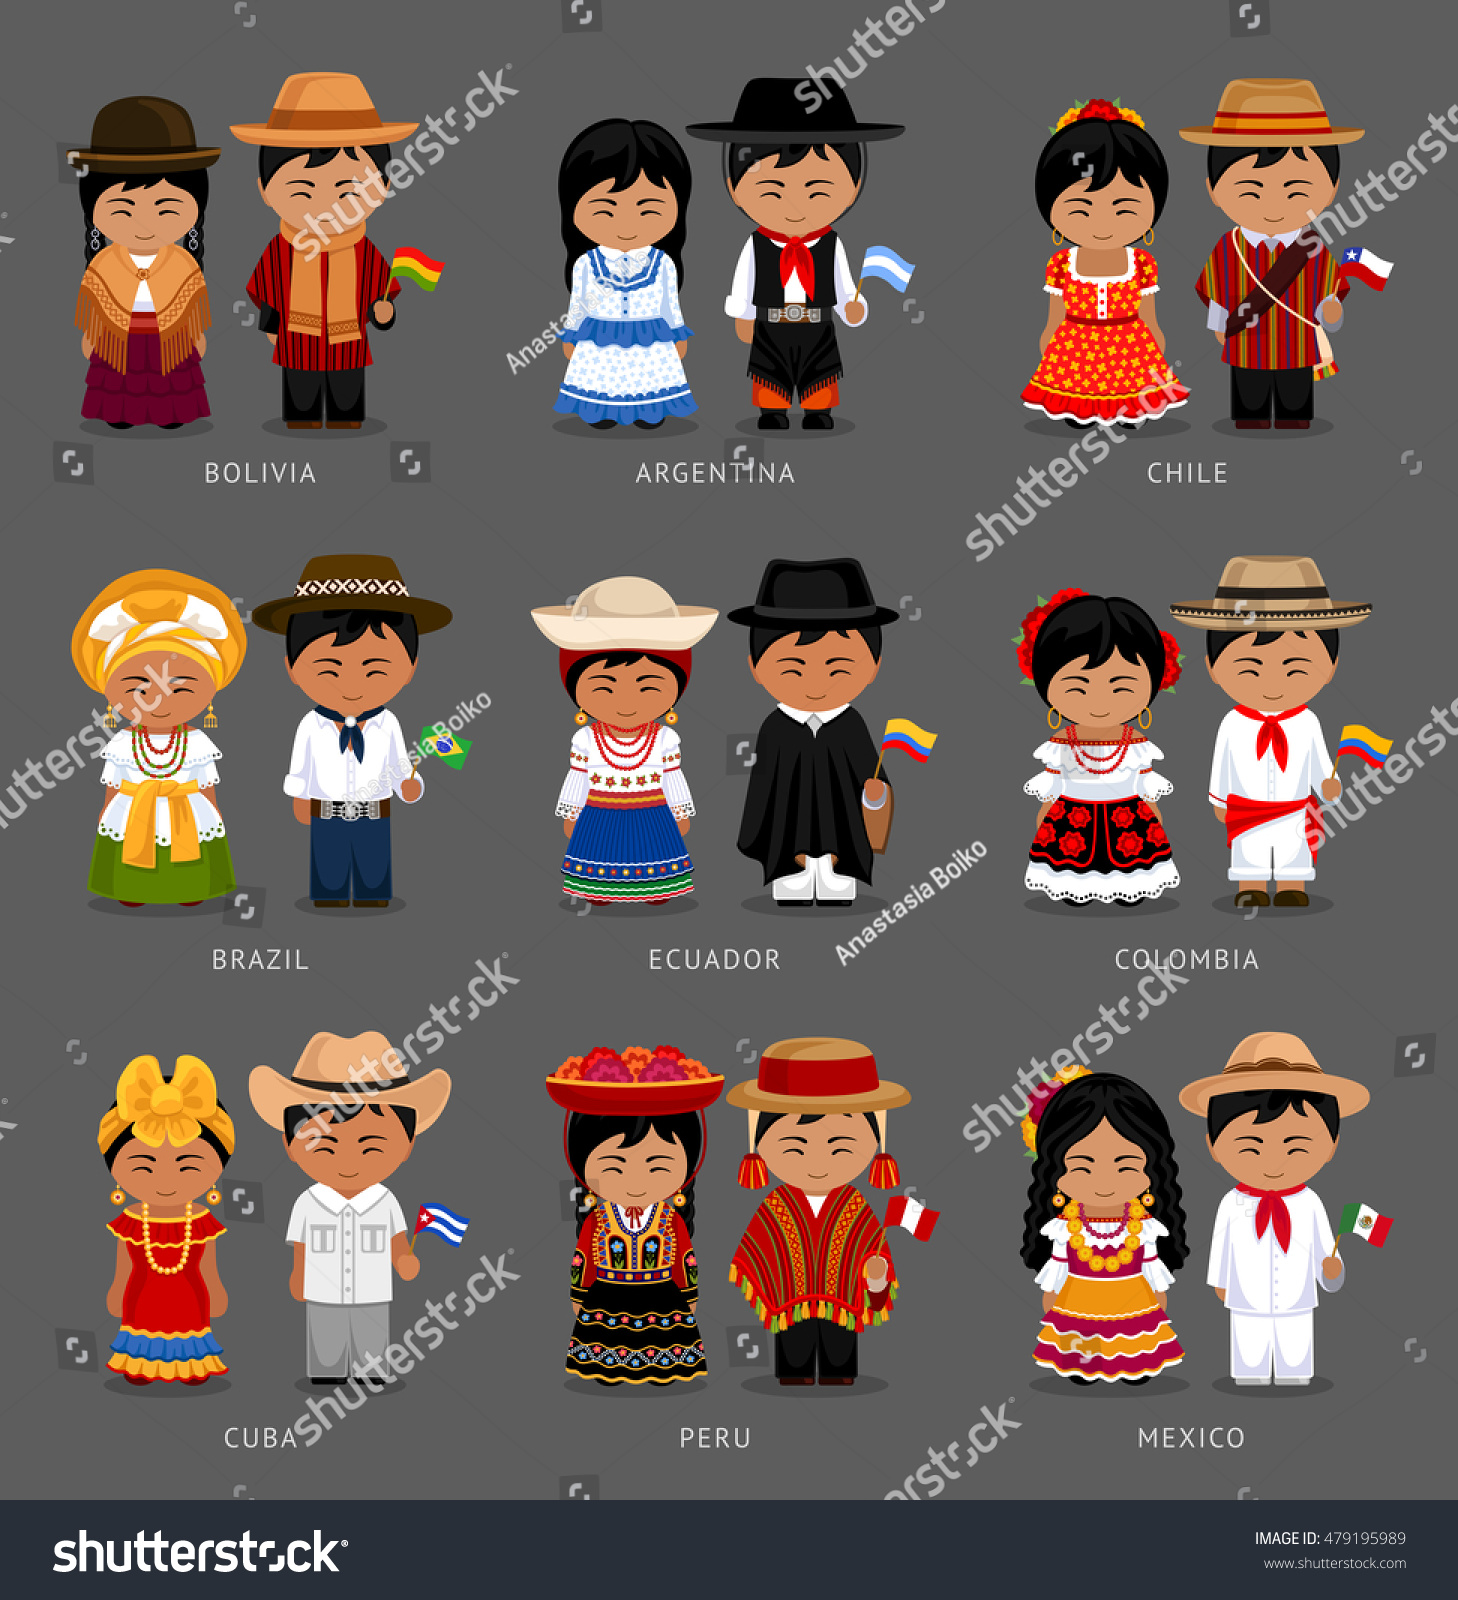 stock-vector-people-in-national-dress-bolivia-argentina-chile-brazil-ecuador-colombia-cuba-peru-mexico-479195989.jpg